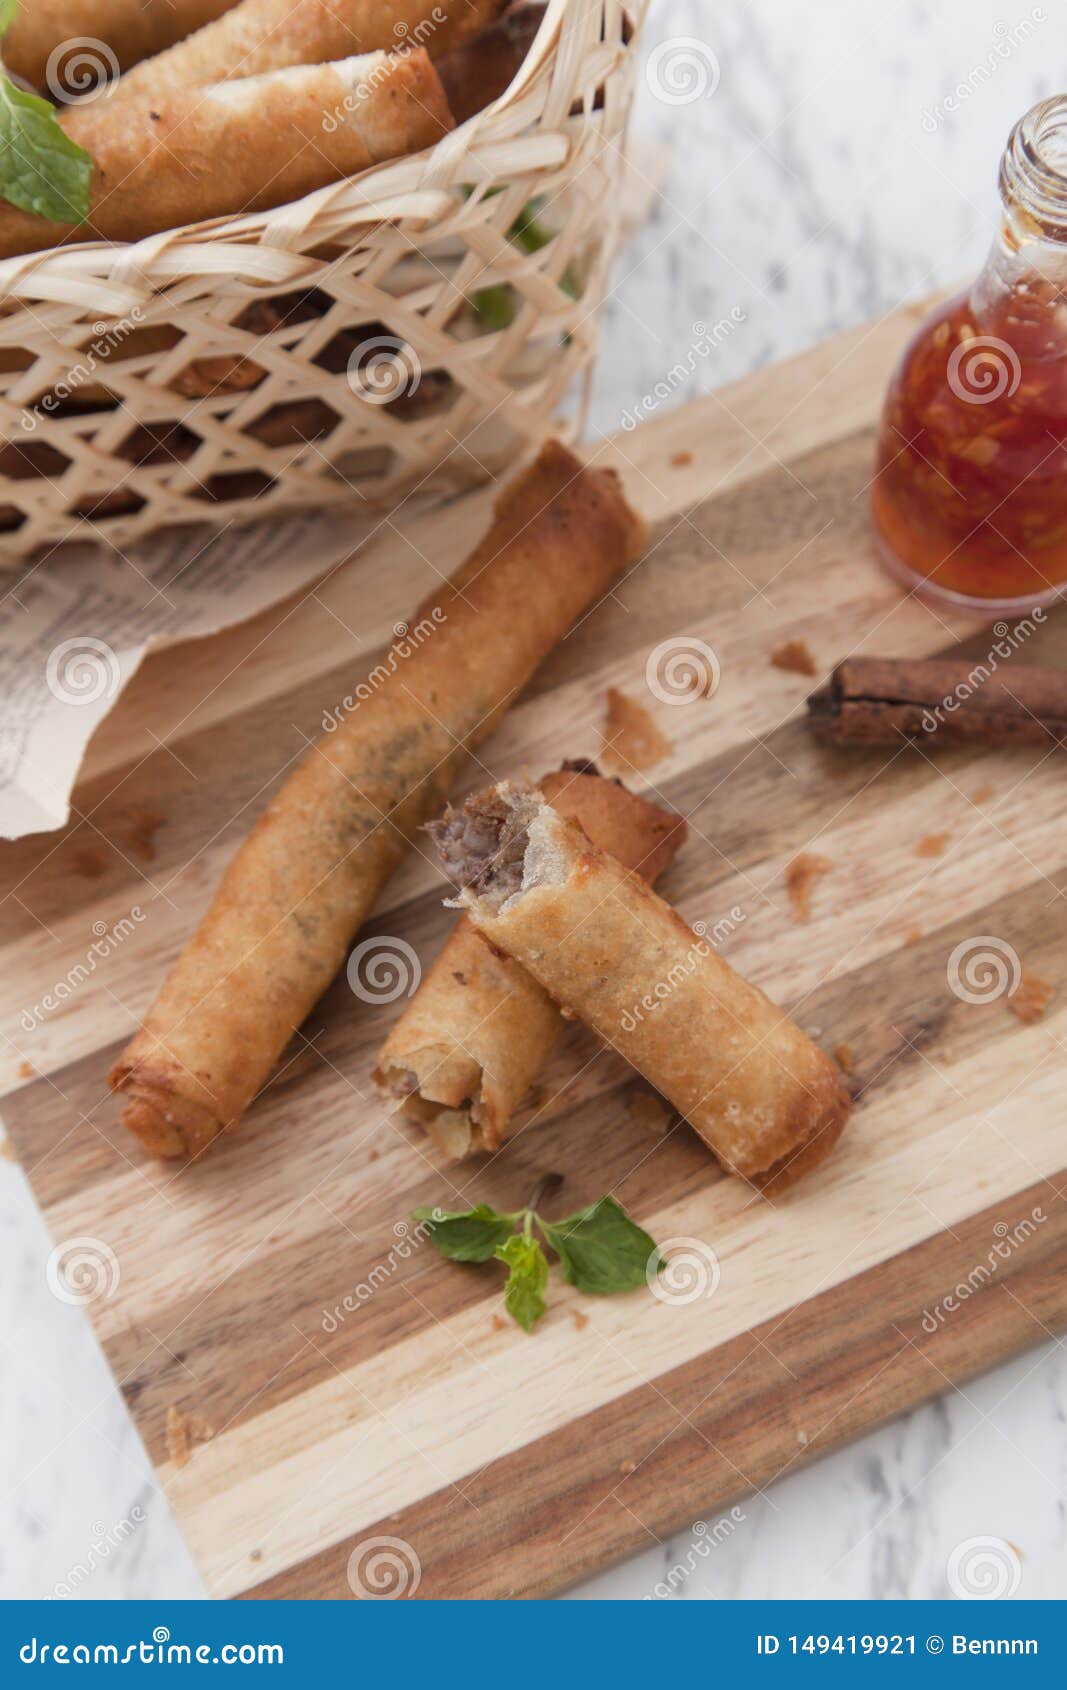 deep fried spring rolls, por pieer tod or fried spring rolls